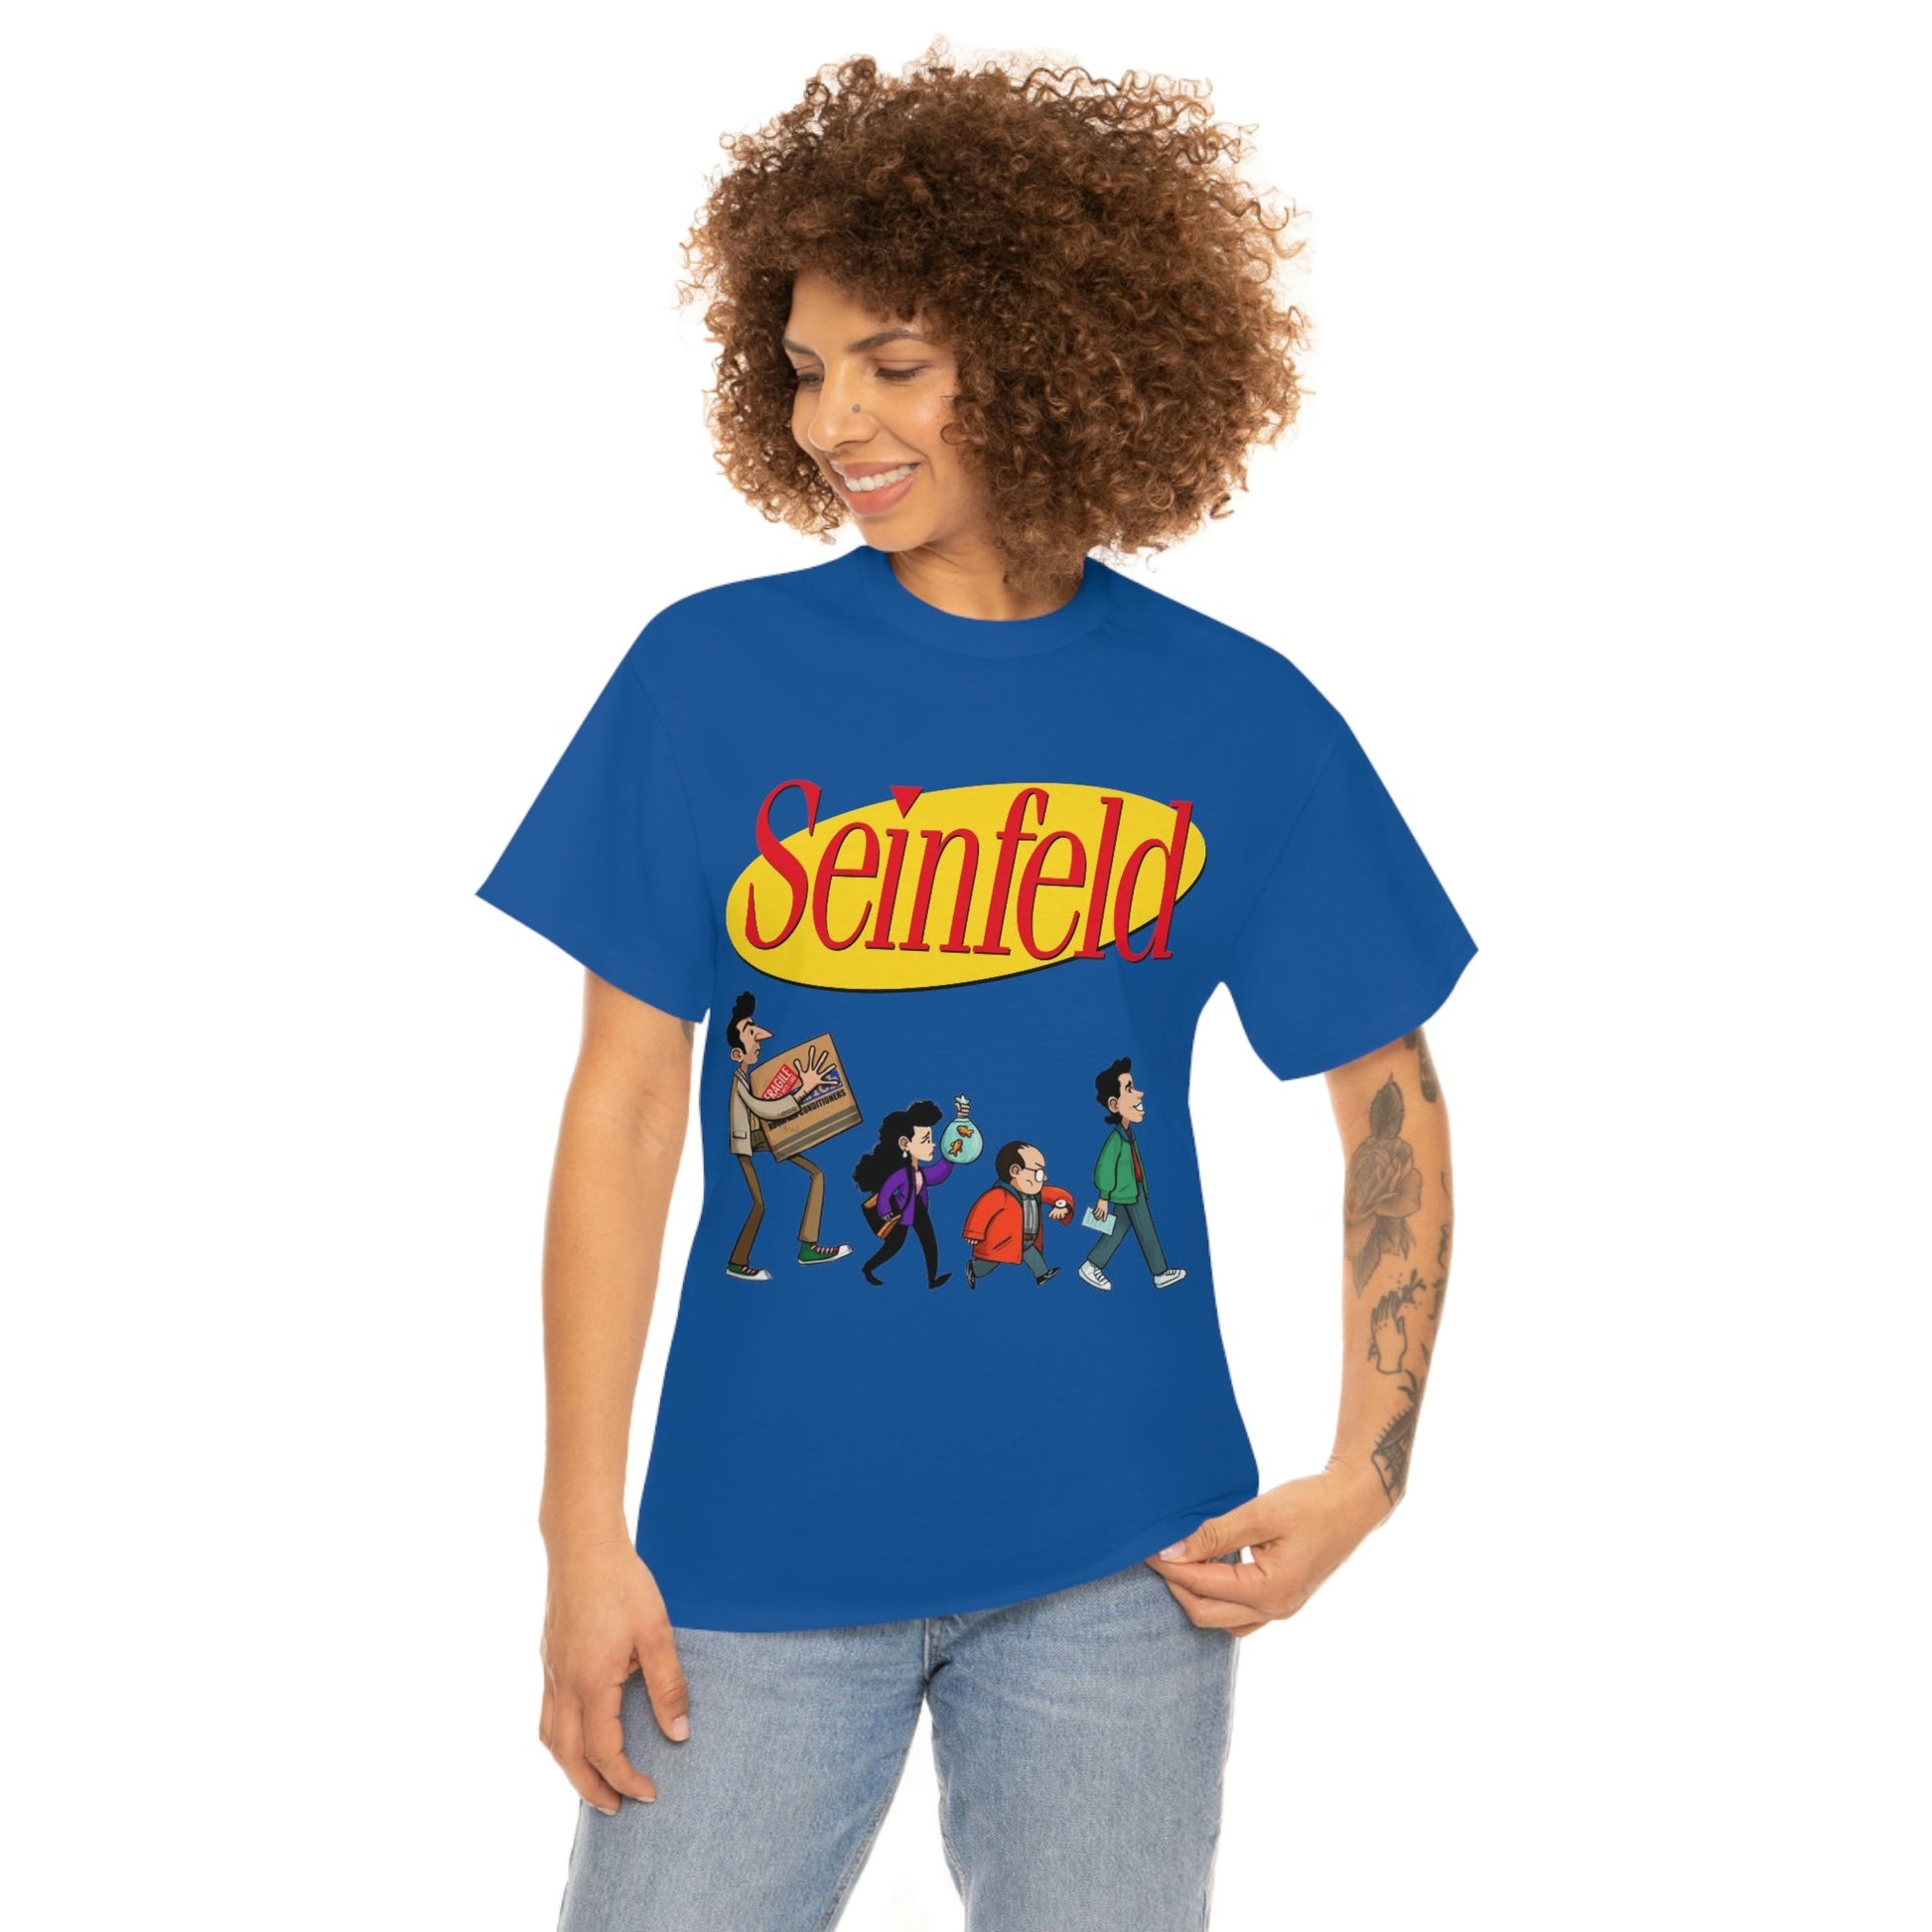 Seinfeld T-Shirt The Parking Garage Graphic Tee - RetroTeeShop